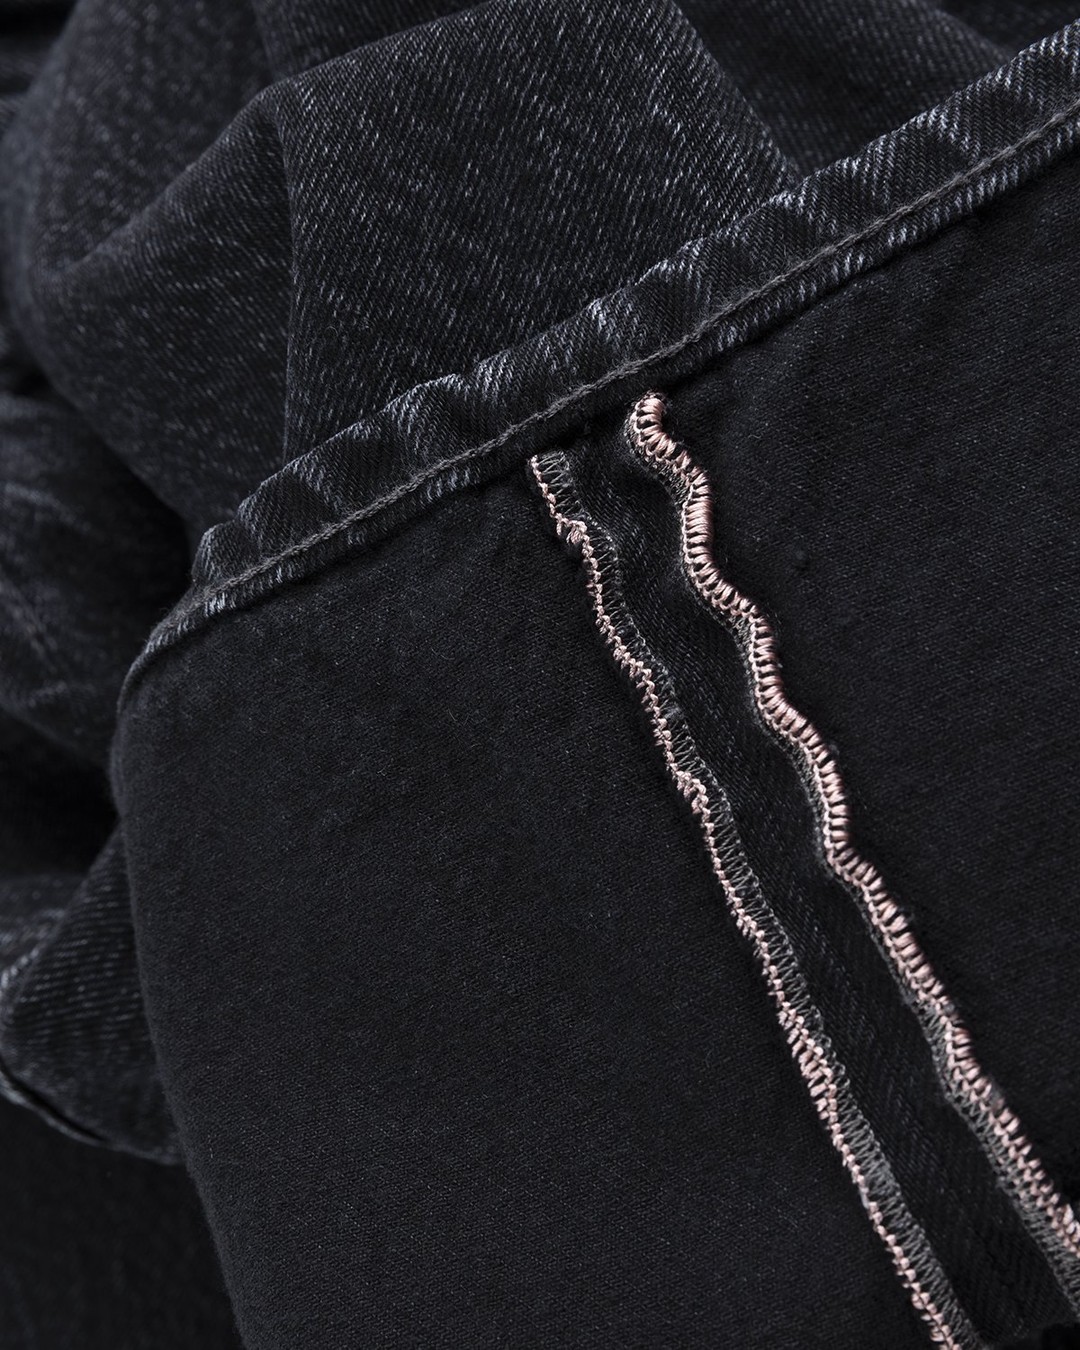 Acne Studios – Brutus 2021M Boot Cut Jeans Black - Pants - Black - Image 6